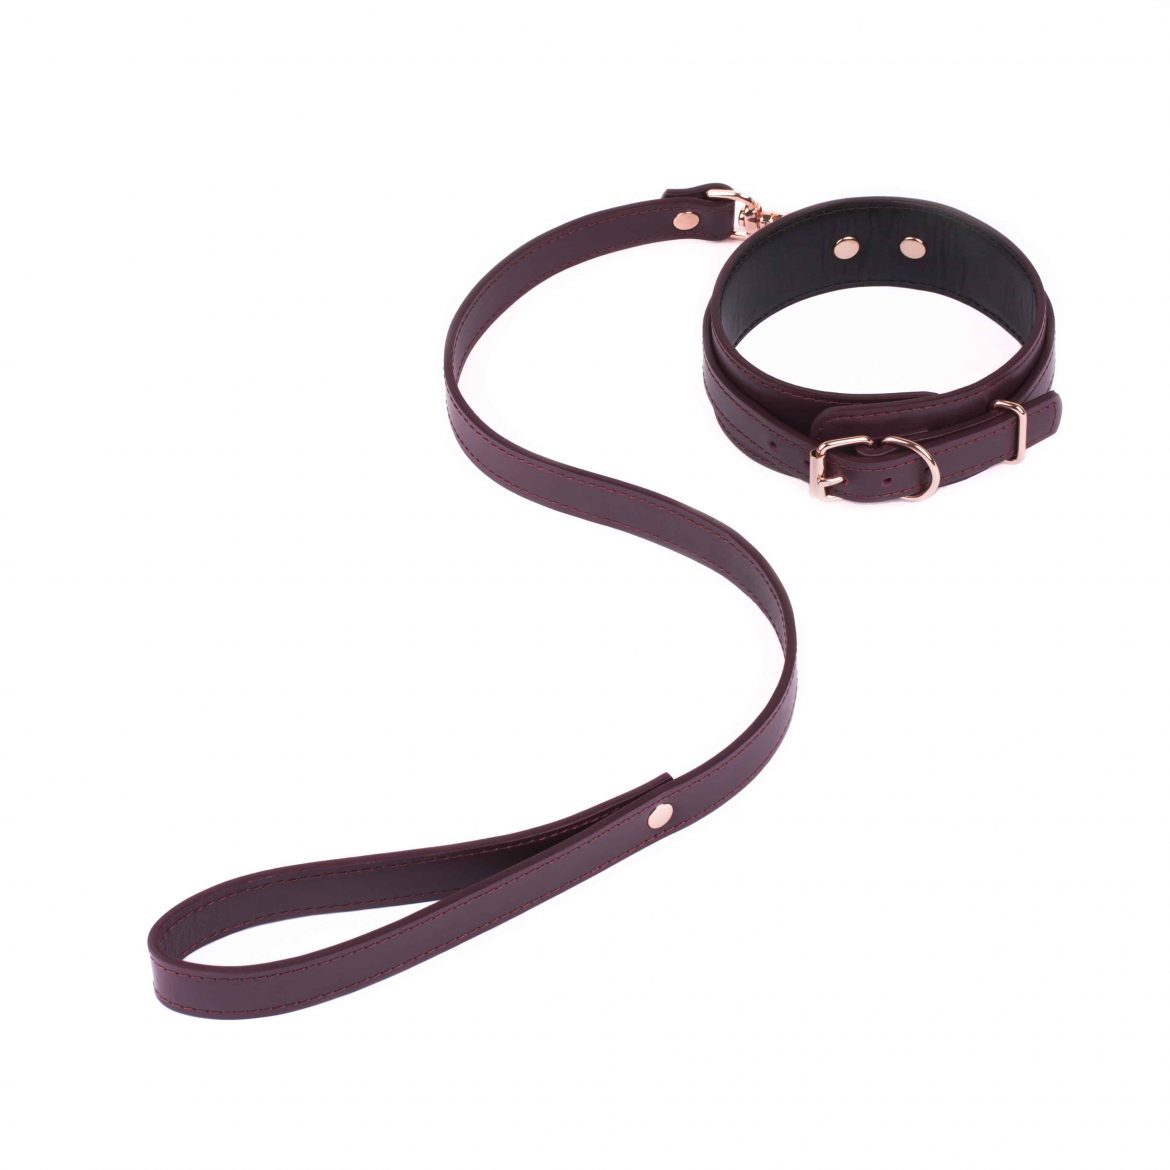 bdsm medium length leather leash 3 1 scaled